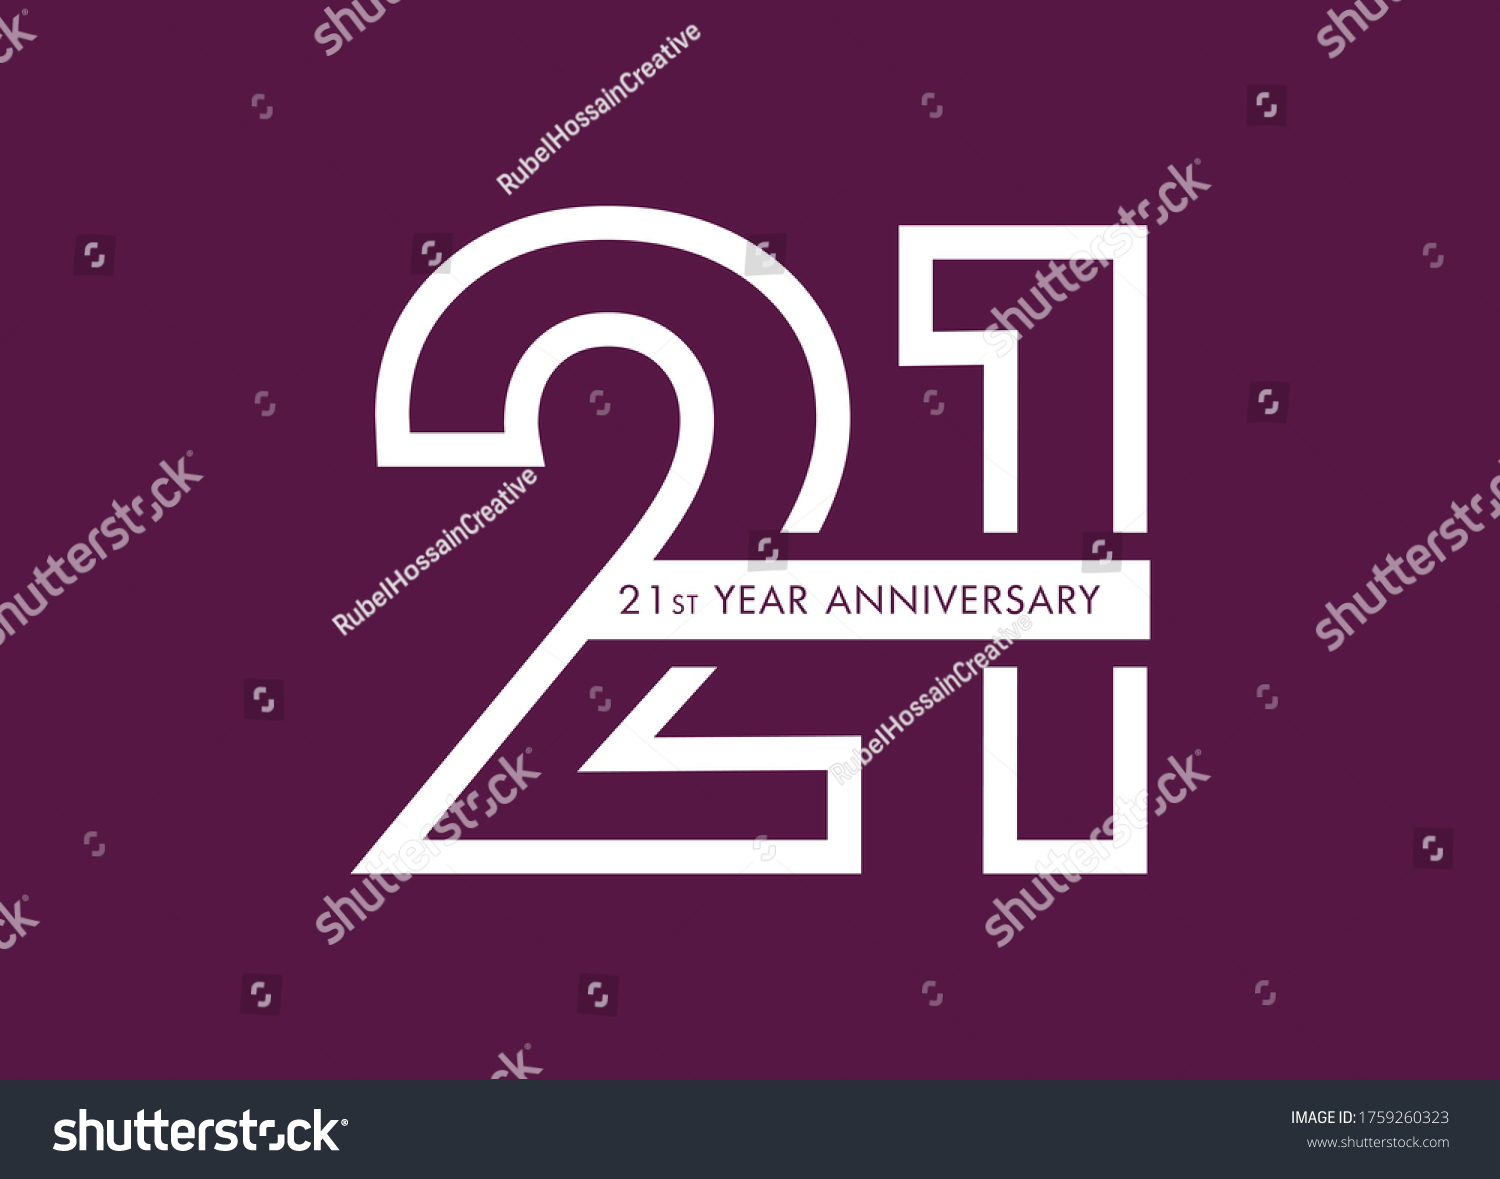 SVG of 21 years anniversary image vector, 21st anniversary celebration logotype  svg